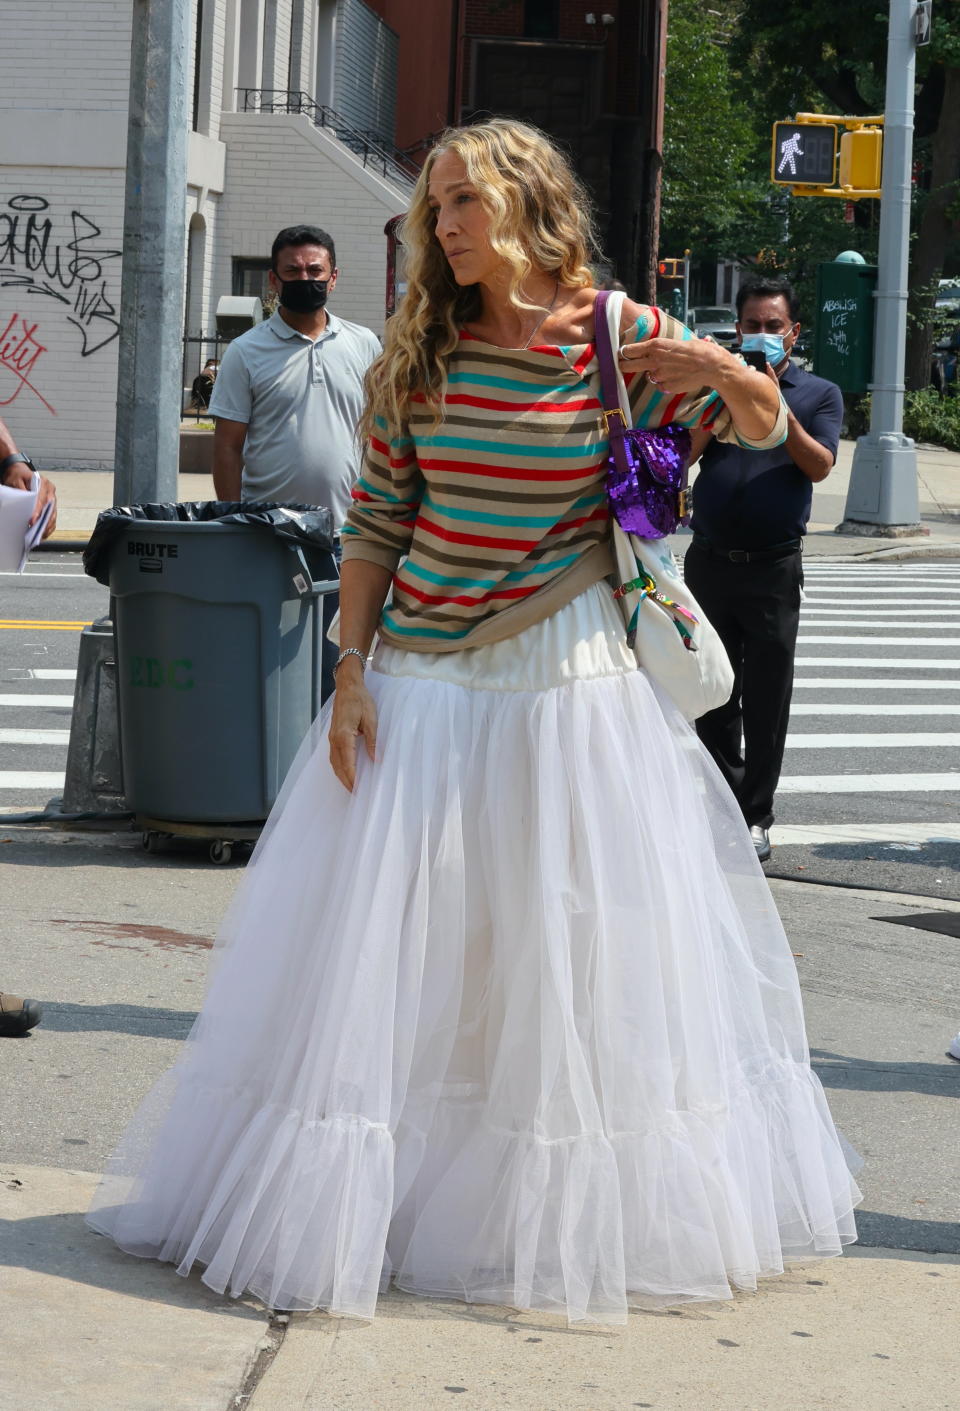 Sarah Jessica Parker is bringing back the tulle skirt for SATC reboot. - Credit: Jose Perez / SplashNews.com